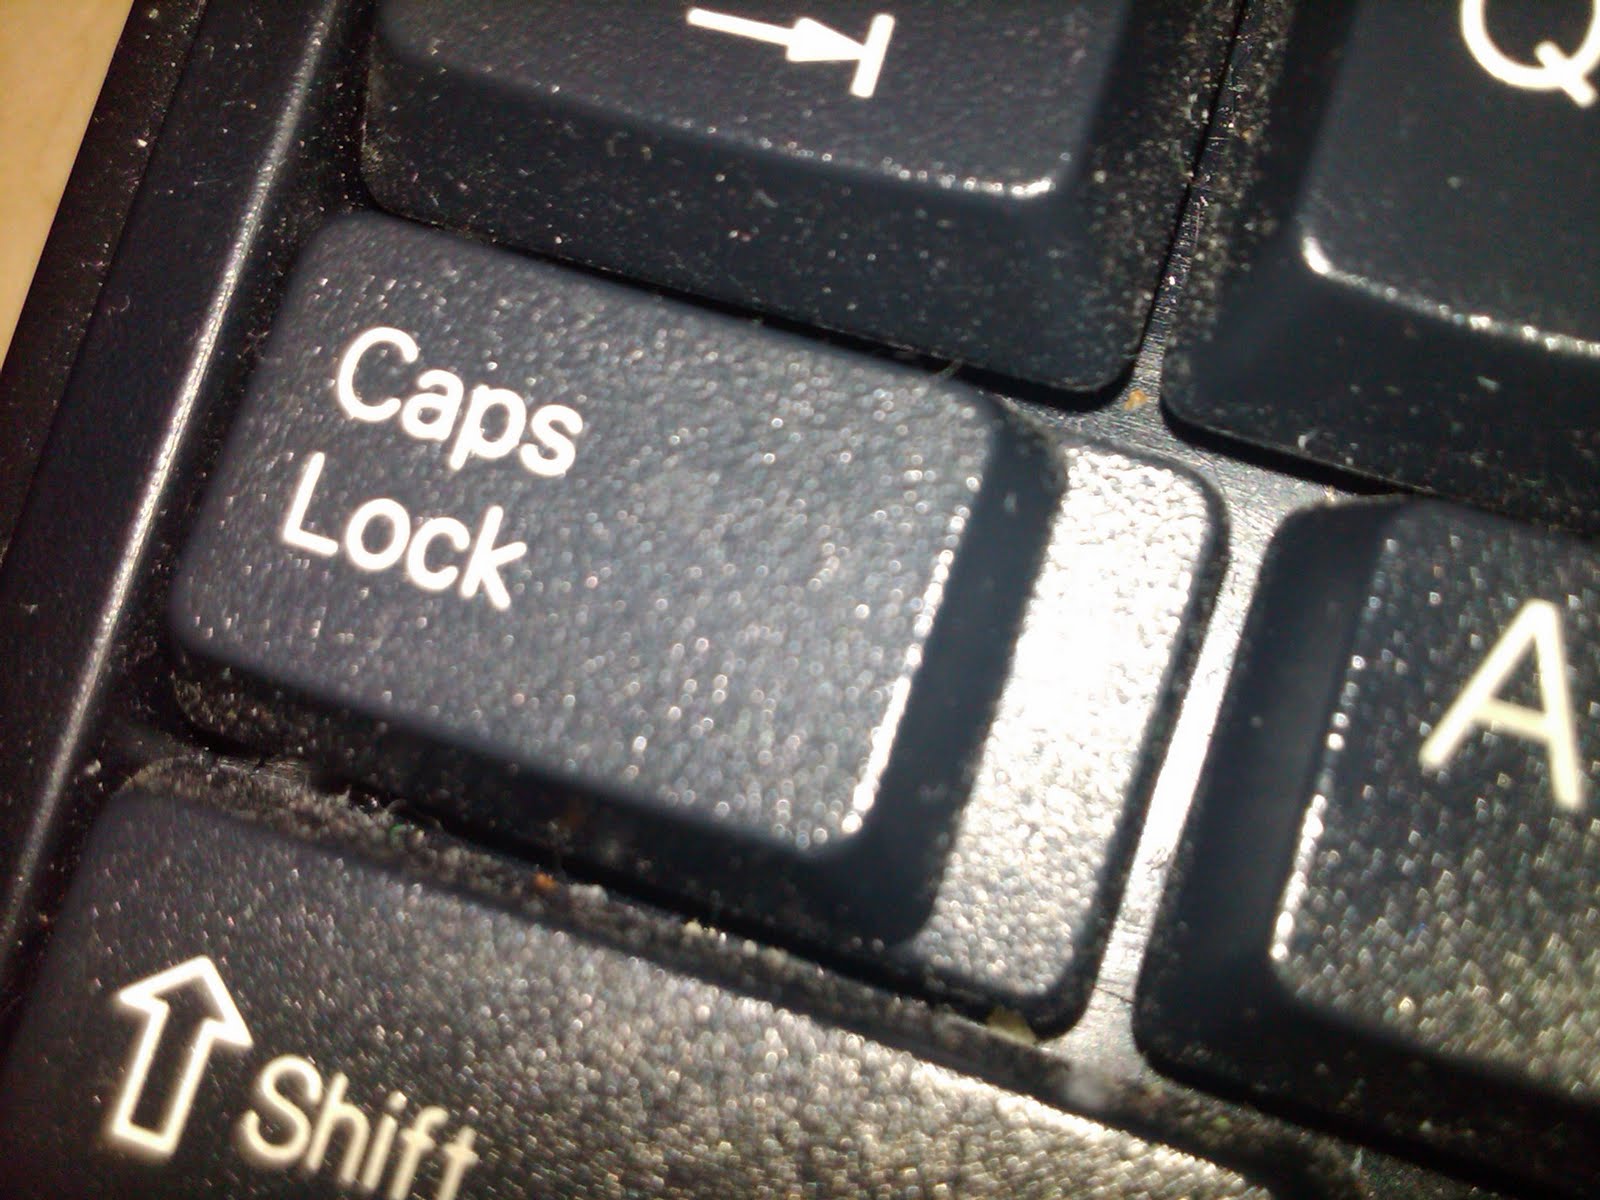 Allow light. Капс лок на клавиатуре. Кнопка капс лок. Клавиша caps Lock на клавиатуре. Кнопка капслок на клавиатуре.